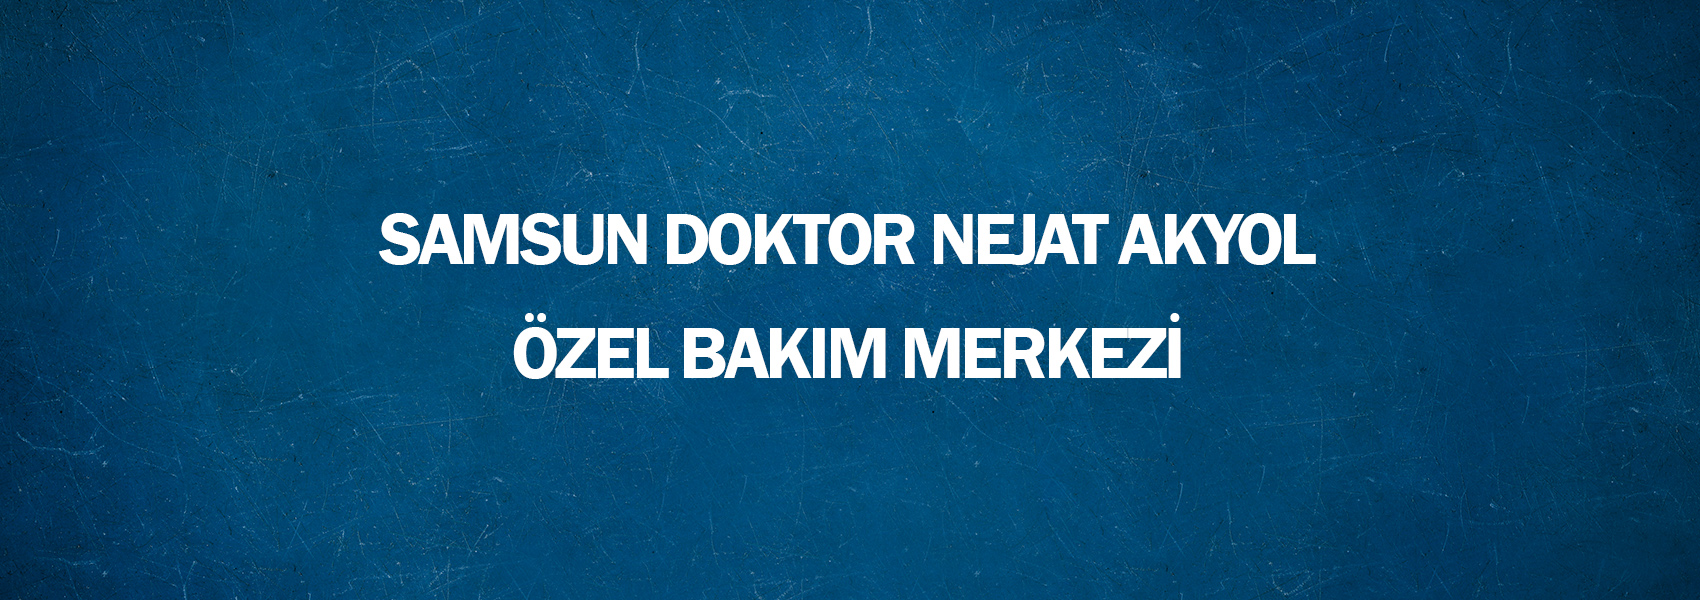 Samsun Doktor Nejat Akyol Özel Bakım Merkezi 2019